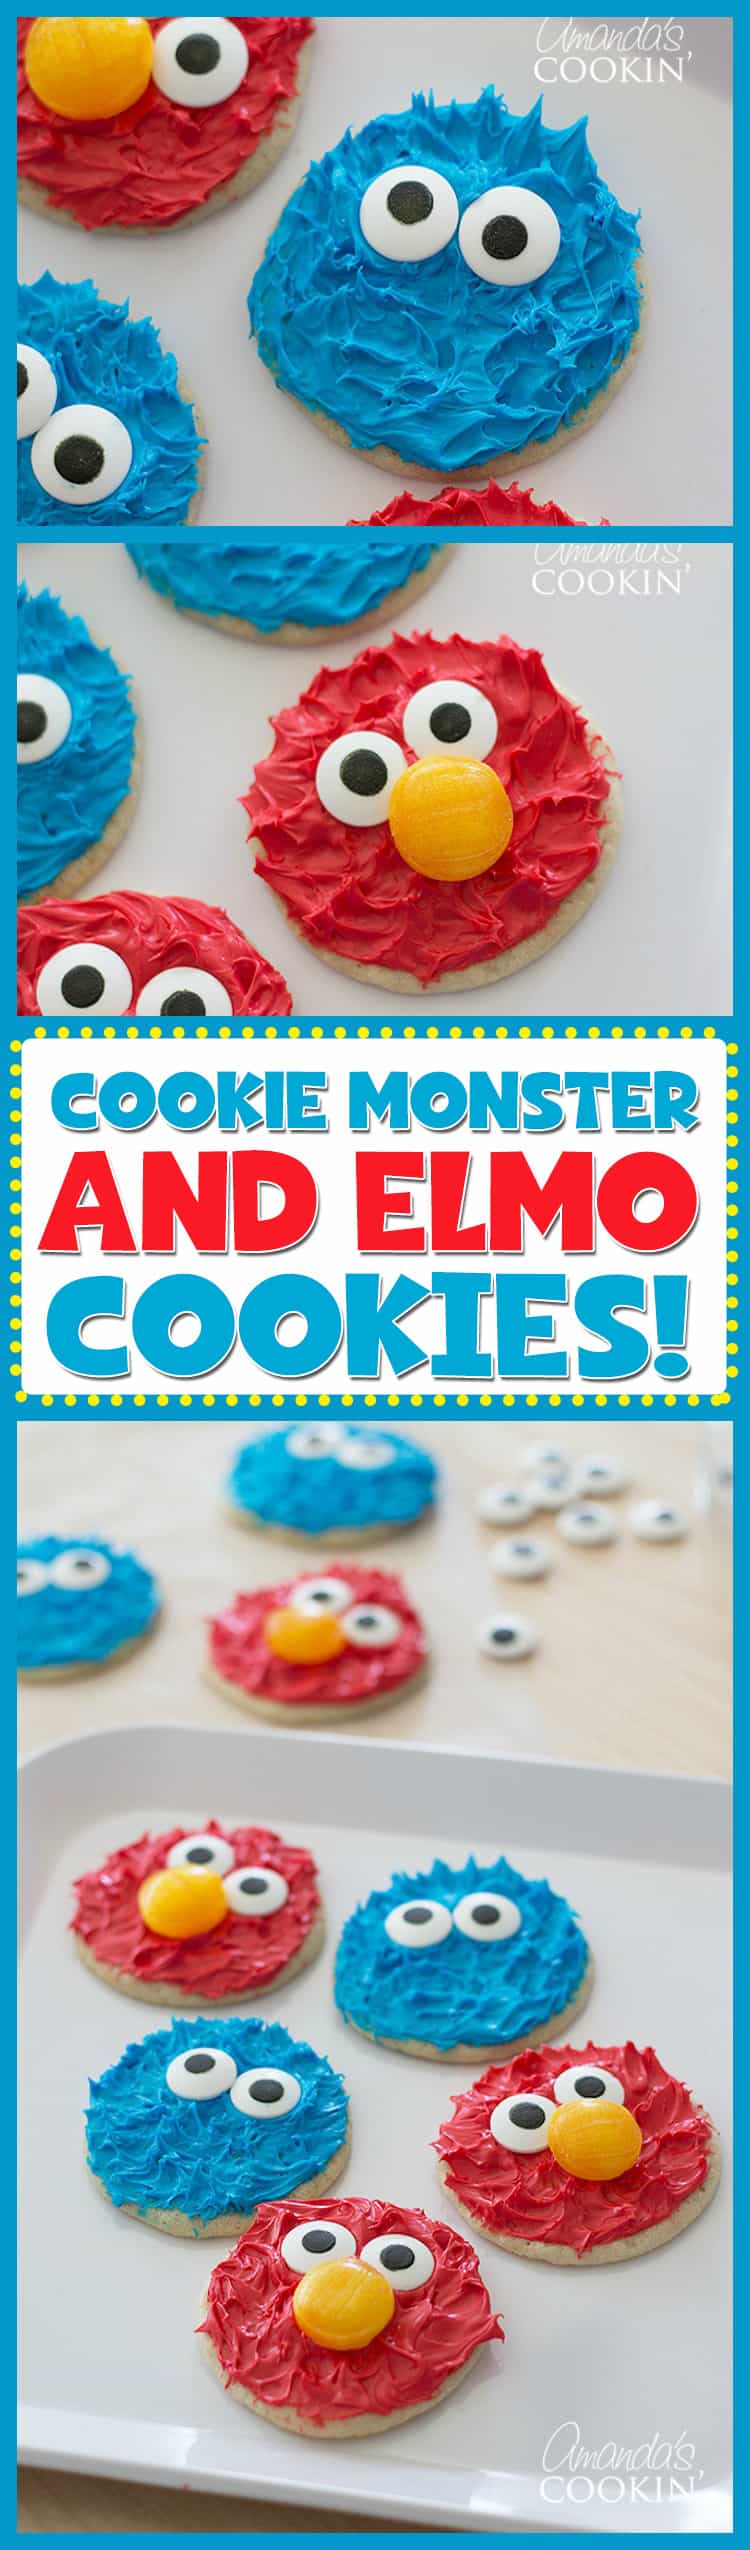 cookie monster and elmo cookies